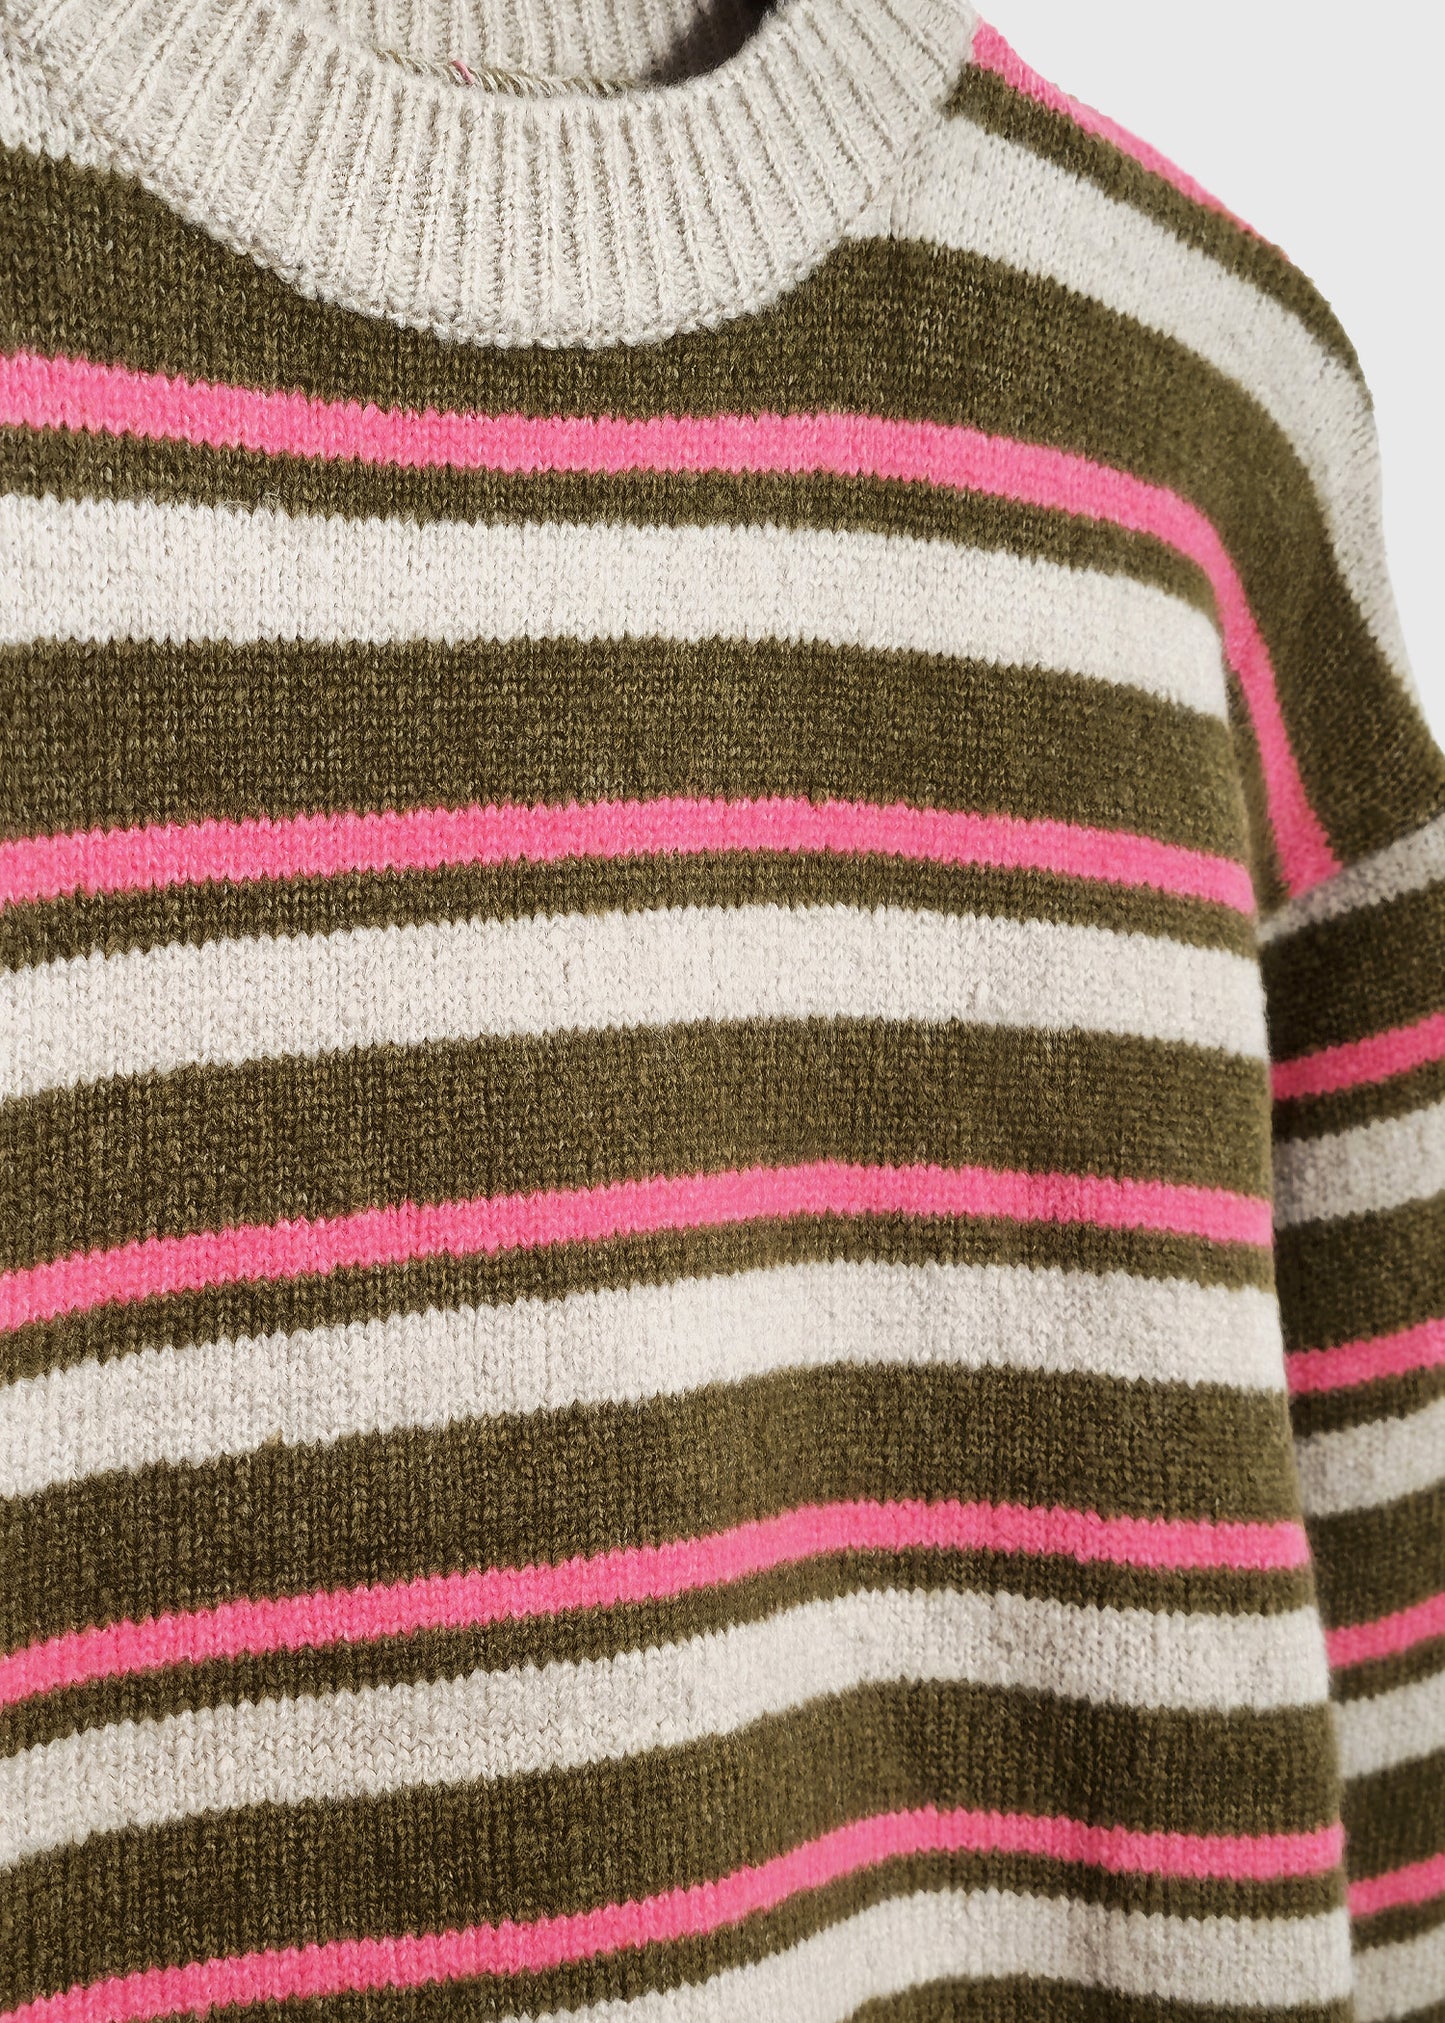 POPCORN Striped Sweater